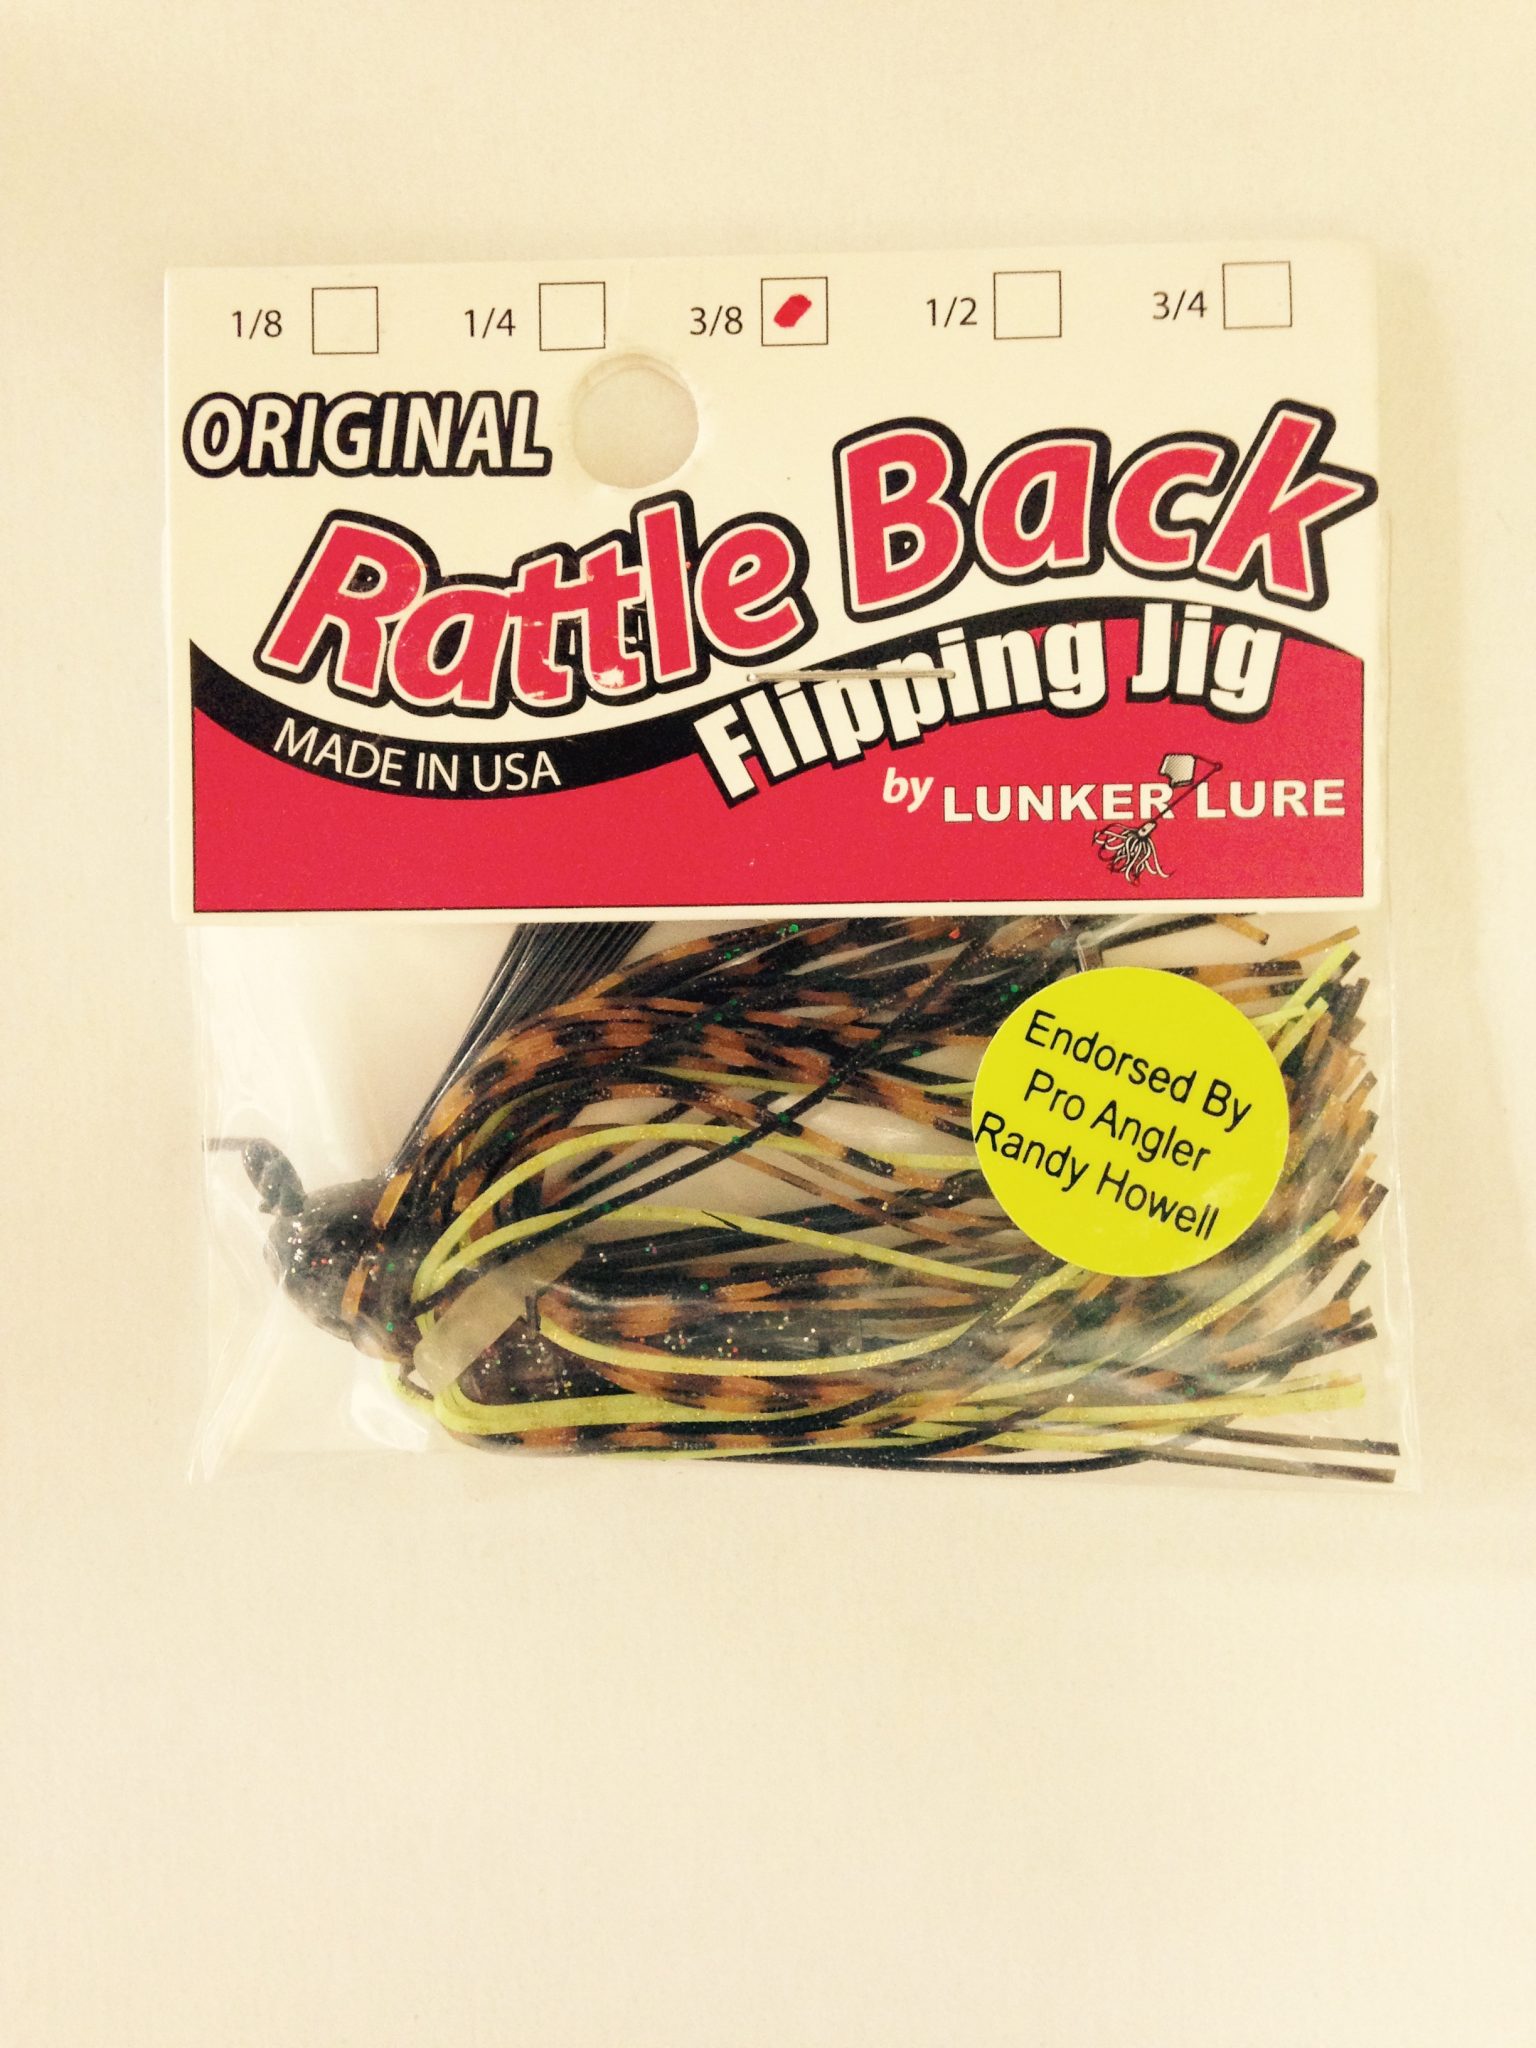 Lunker Lure Original Rattle Back Flipping Jig 3/8 Oz.